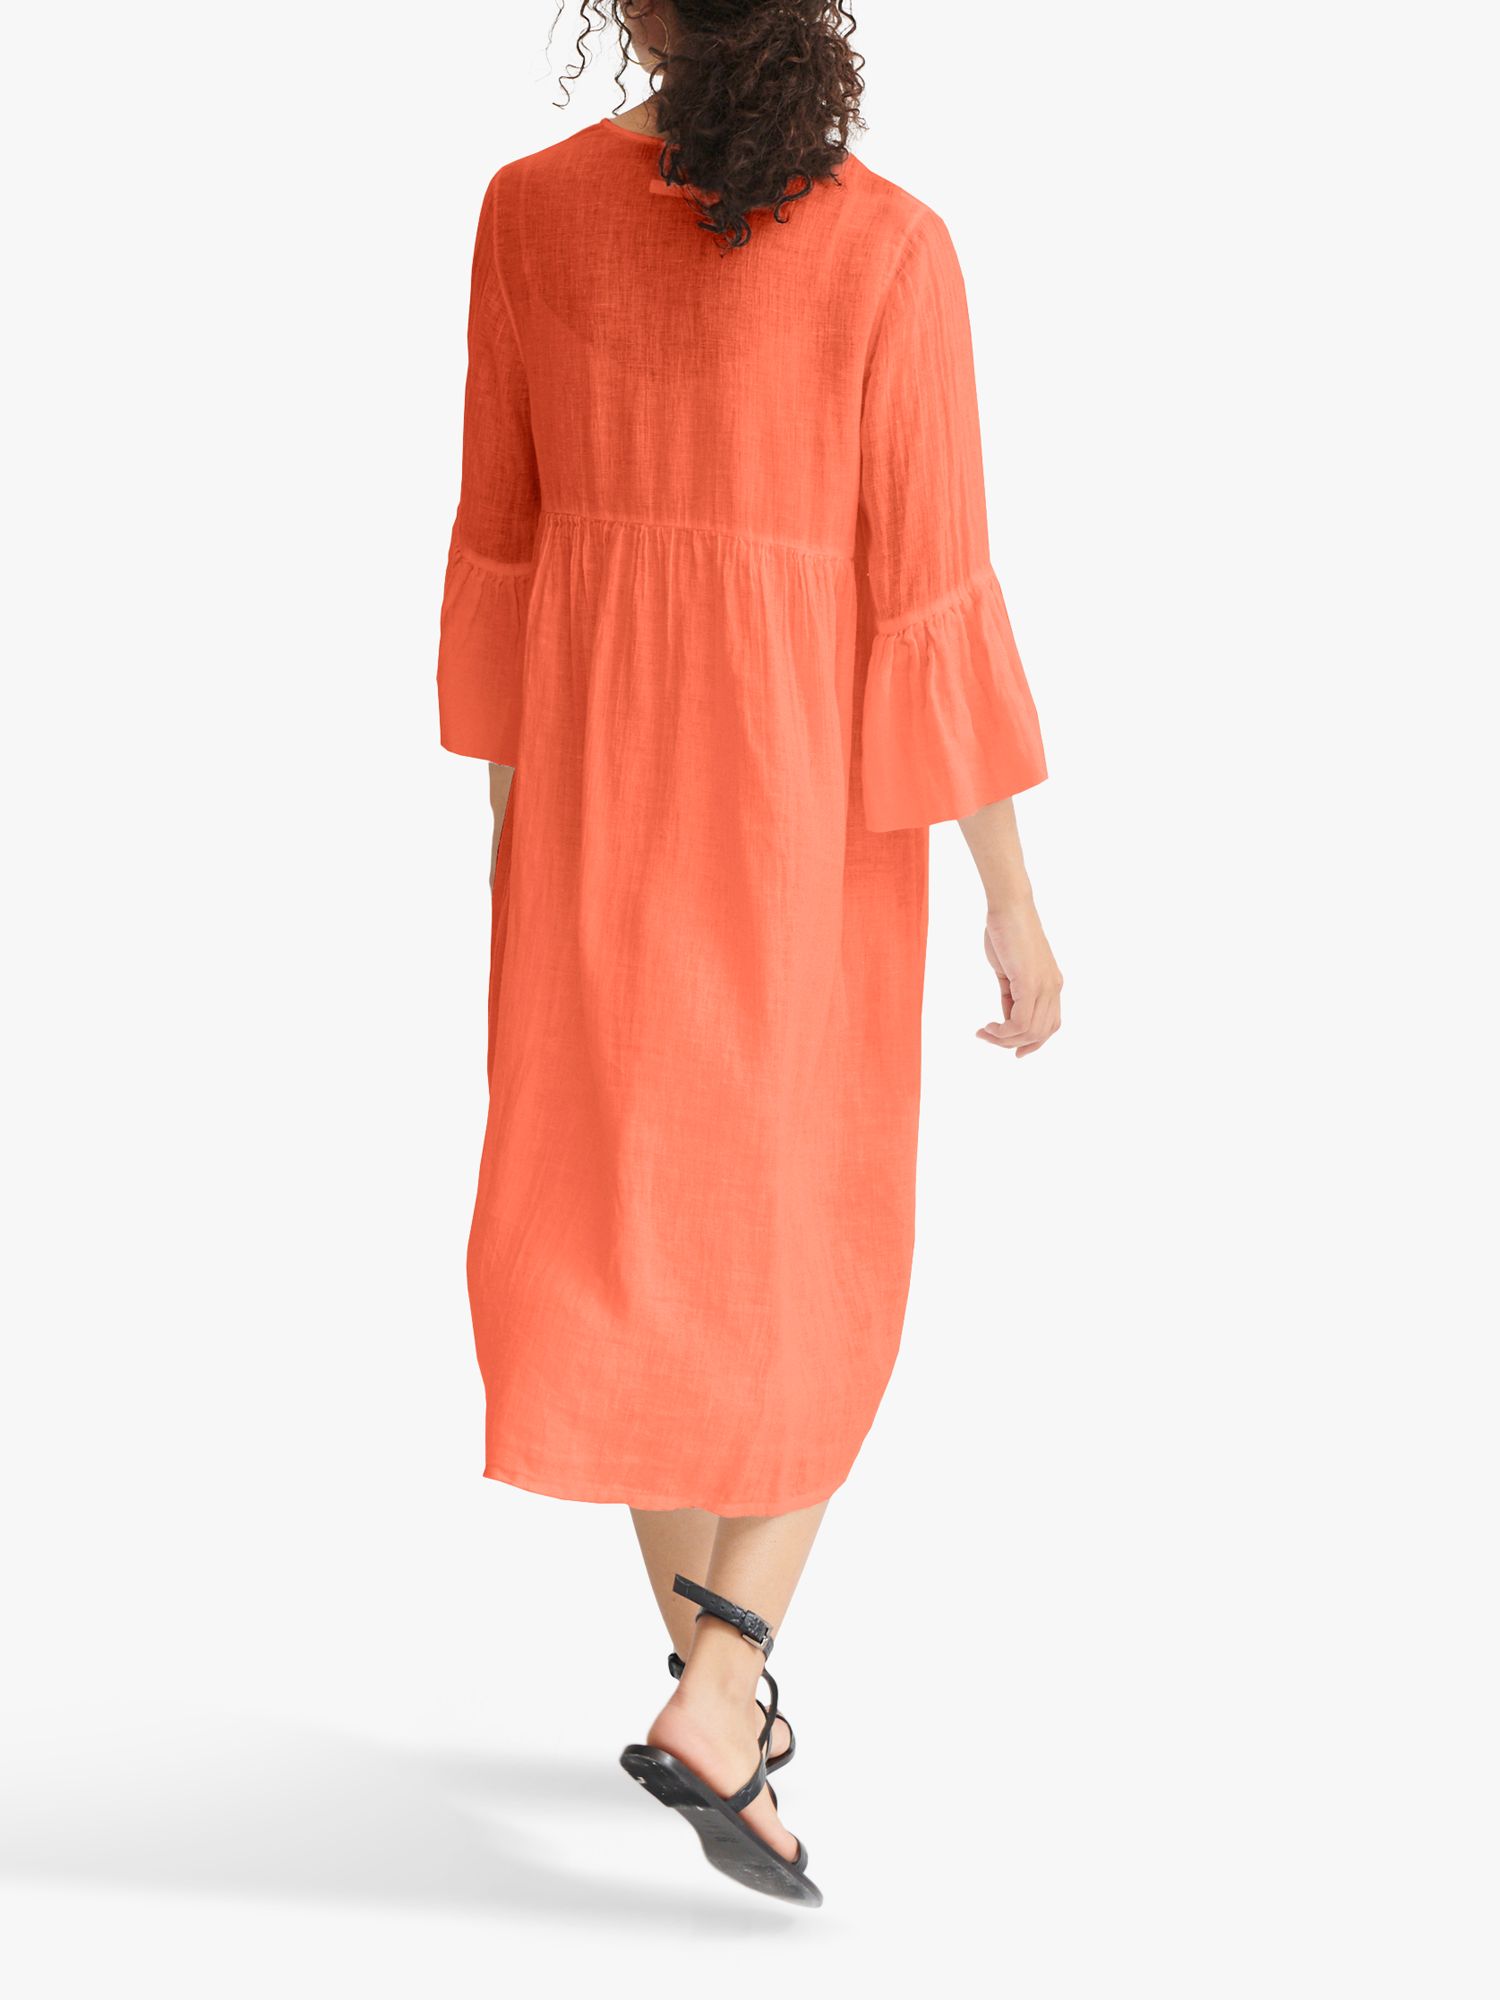 NRBY Ava Linen Dress, Orange at John Lewis & Partners